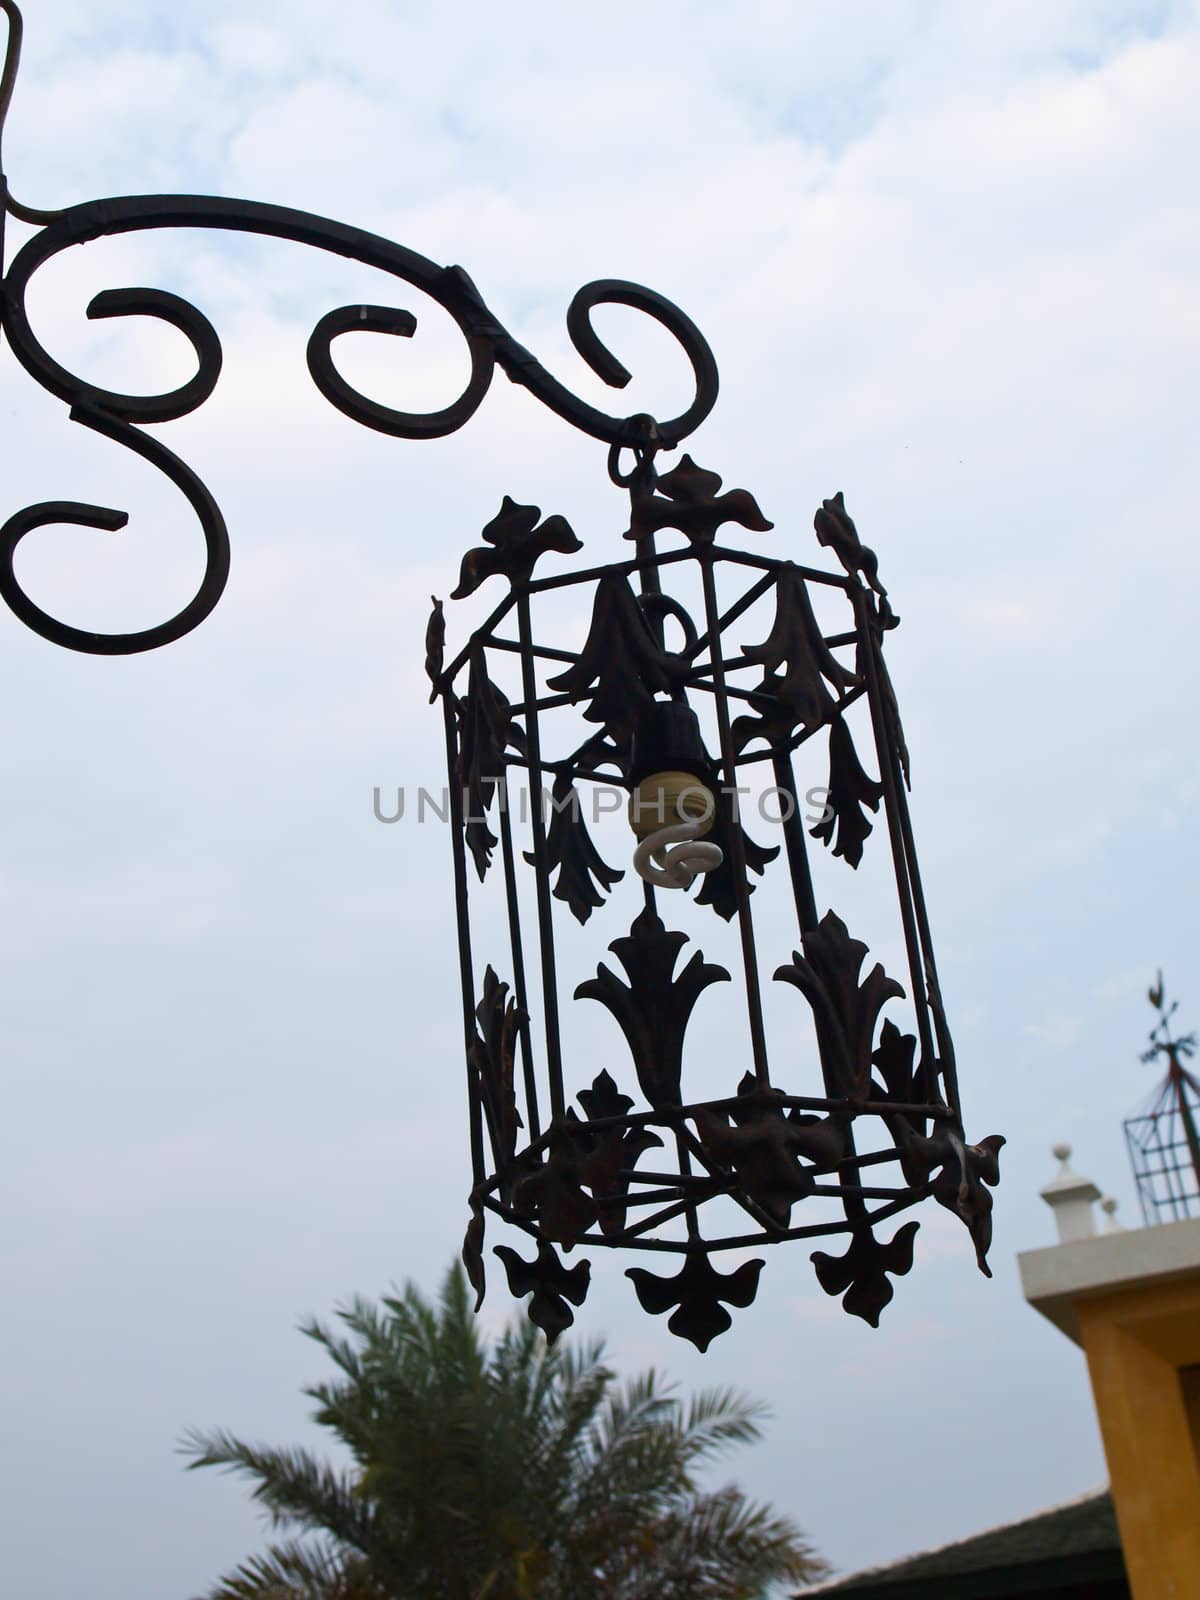 Antique bronze lantern in nature by gururugu